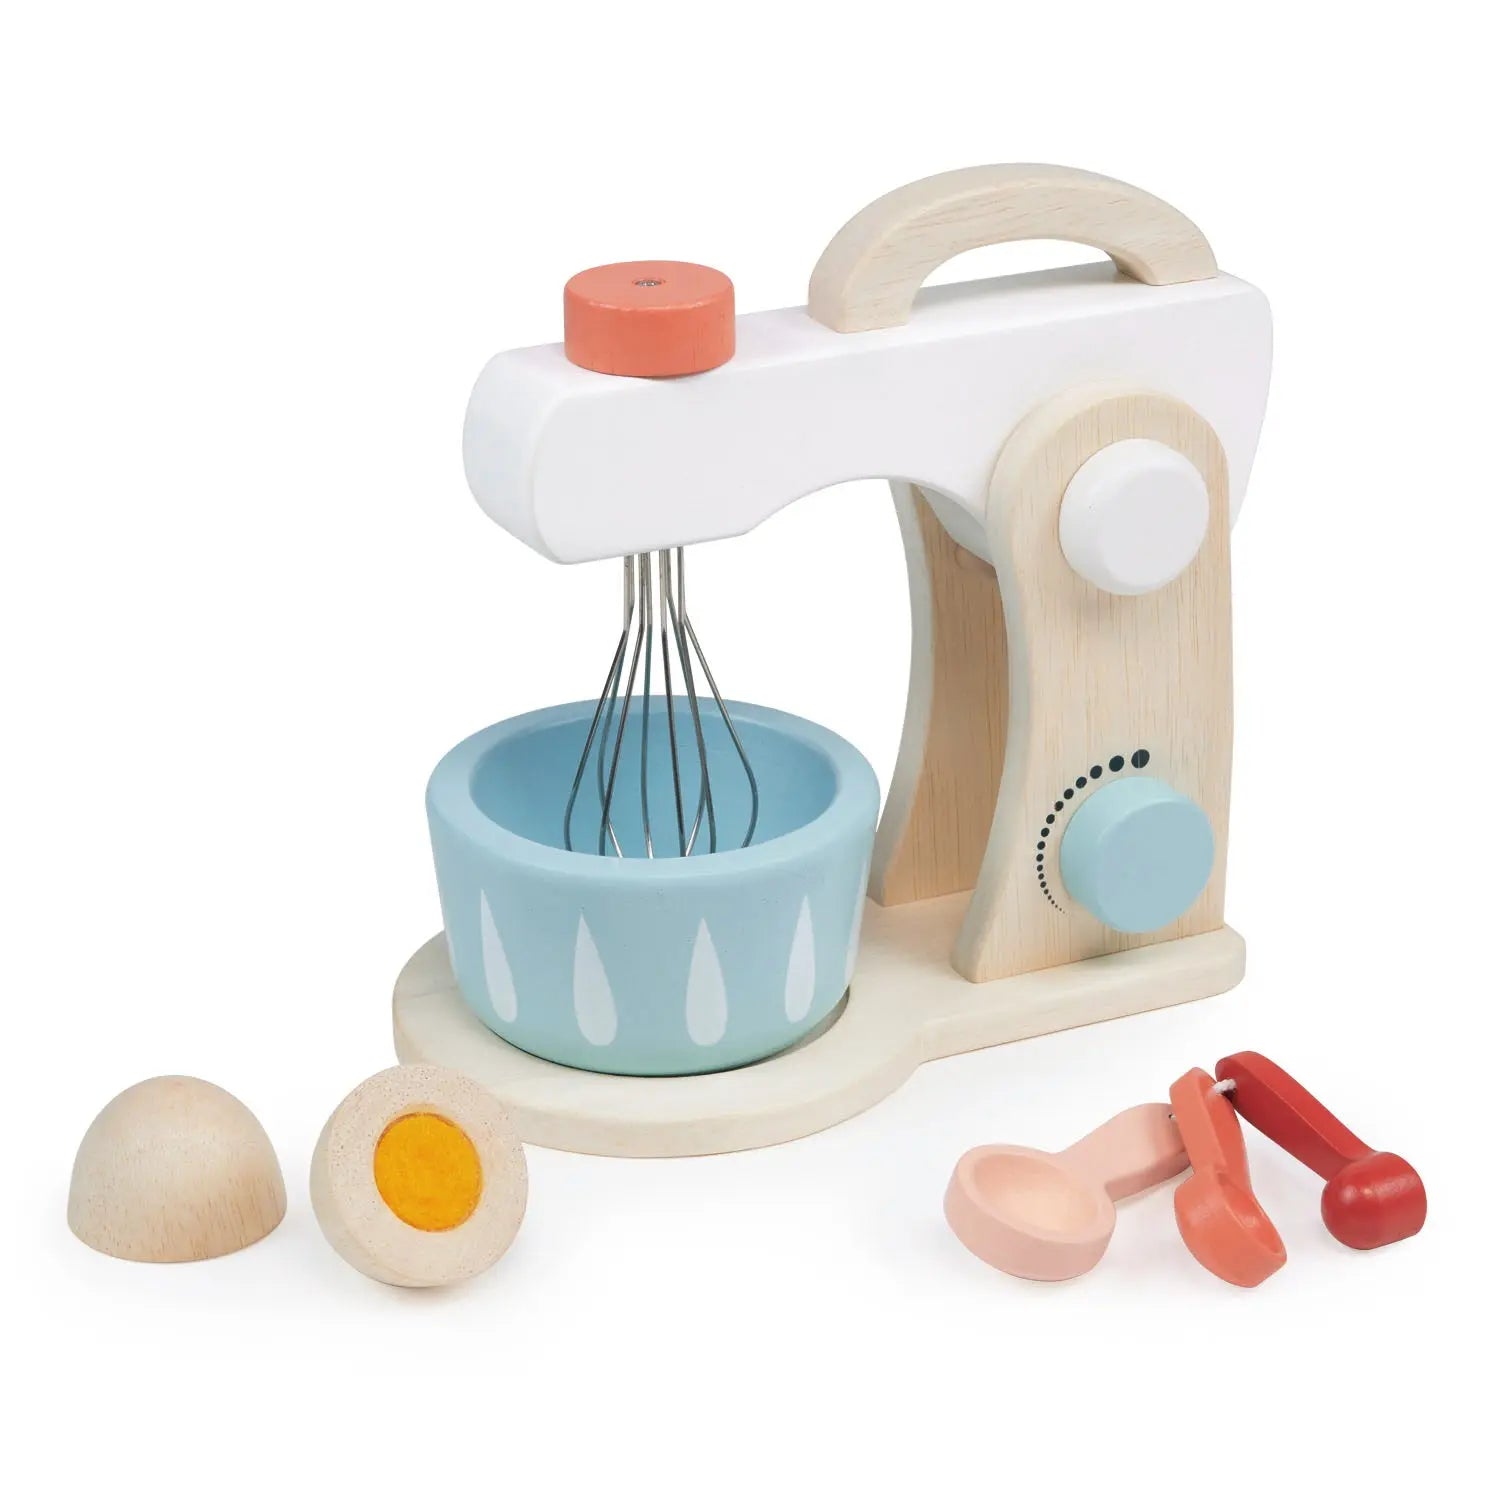 Wooden Cake Mixer Toy Mentari